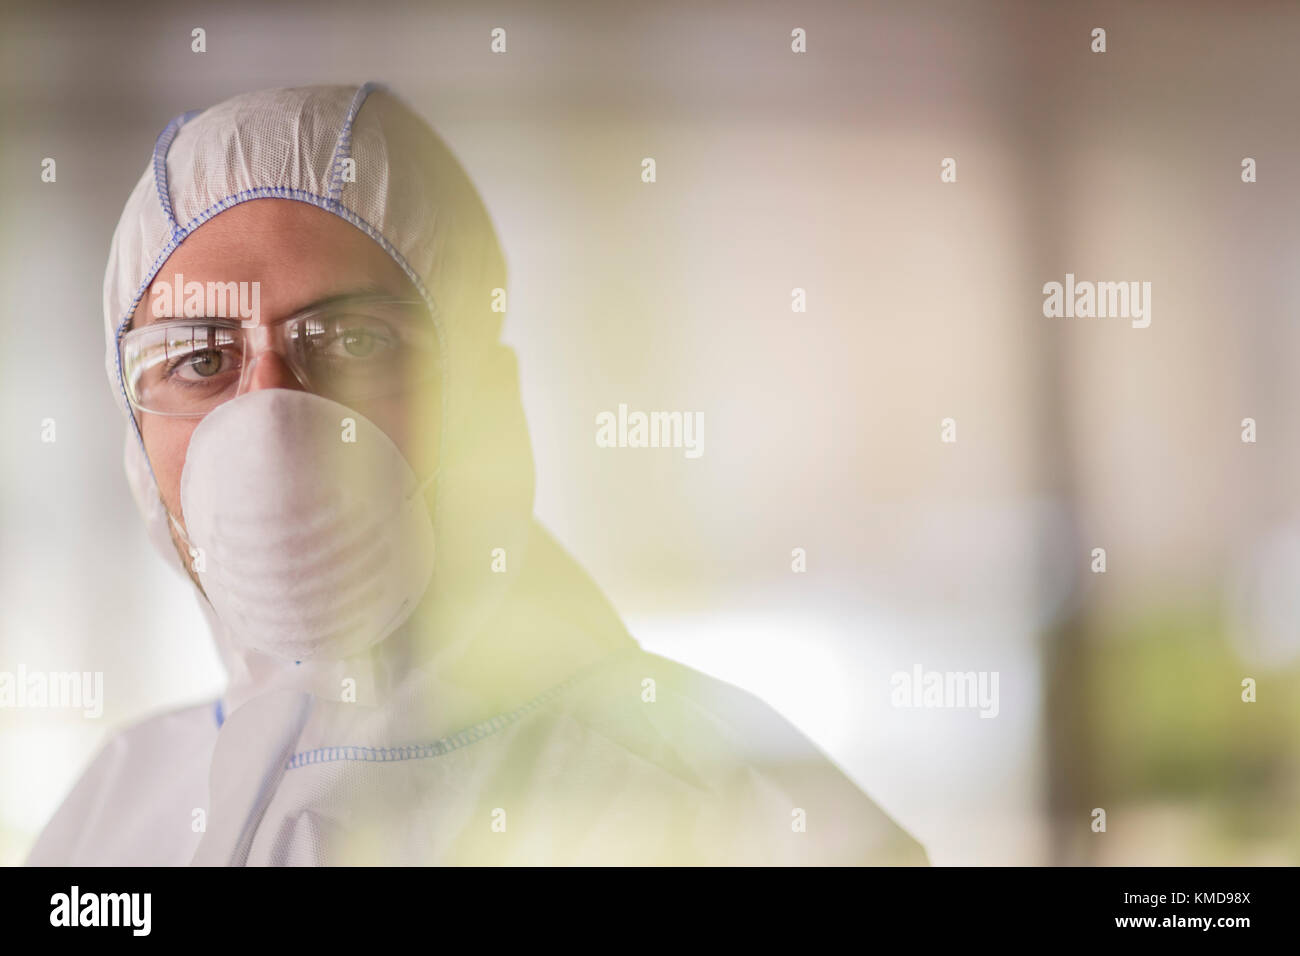 Portrait scientist in clean suit Stock Photo